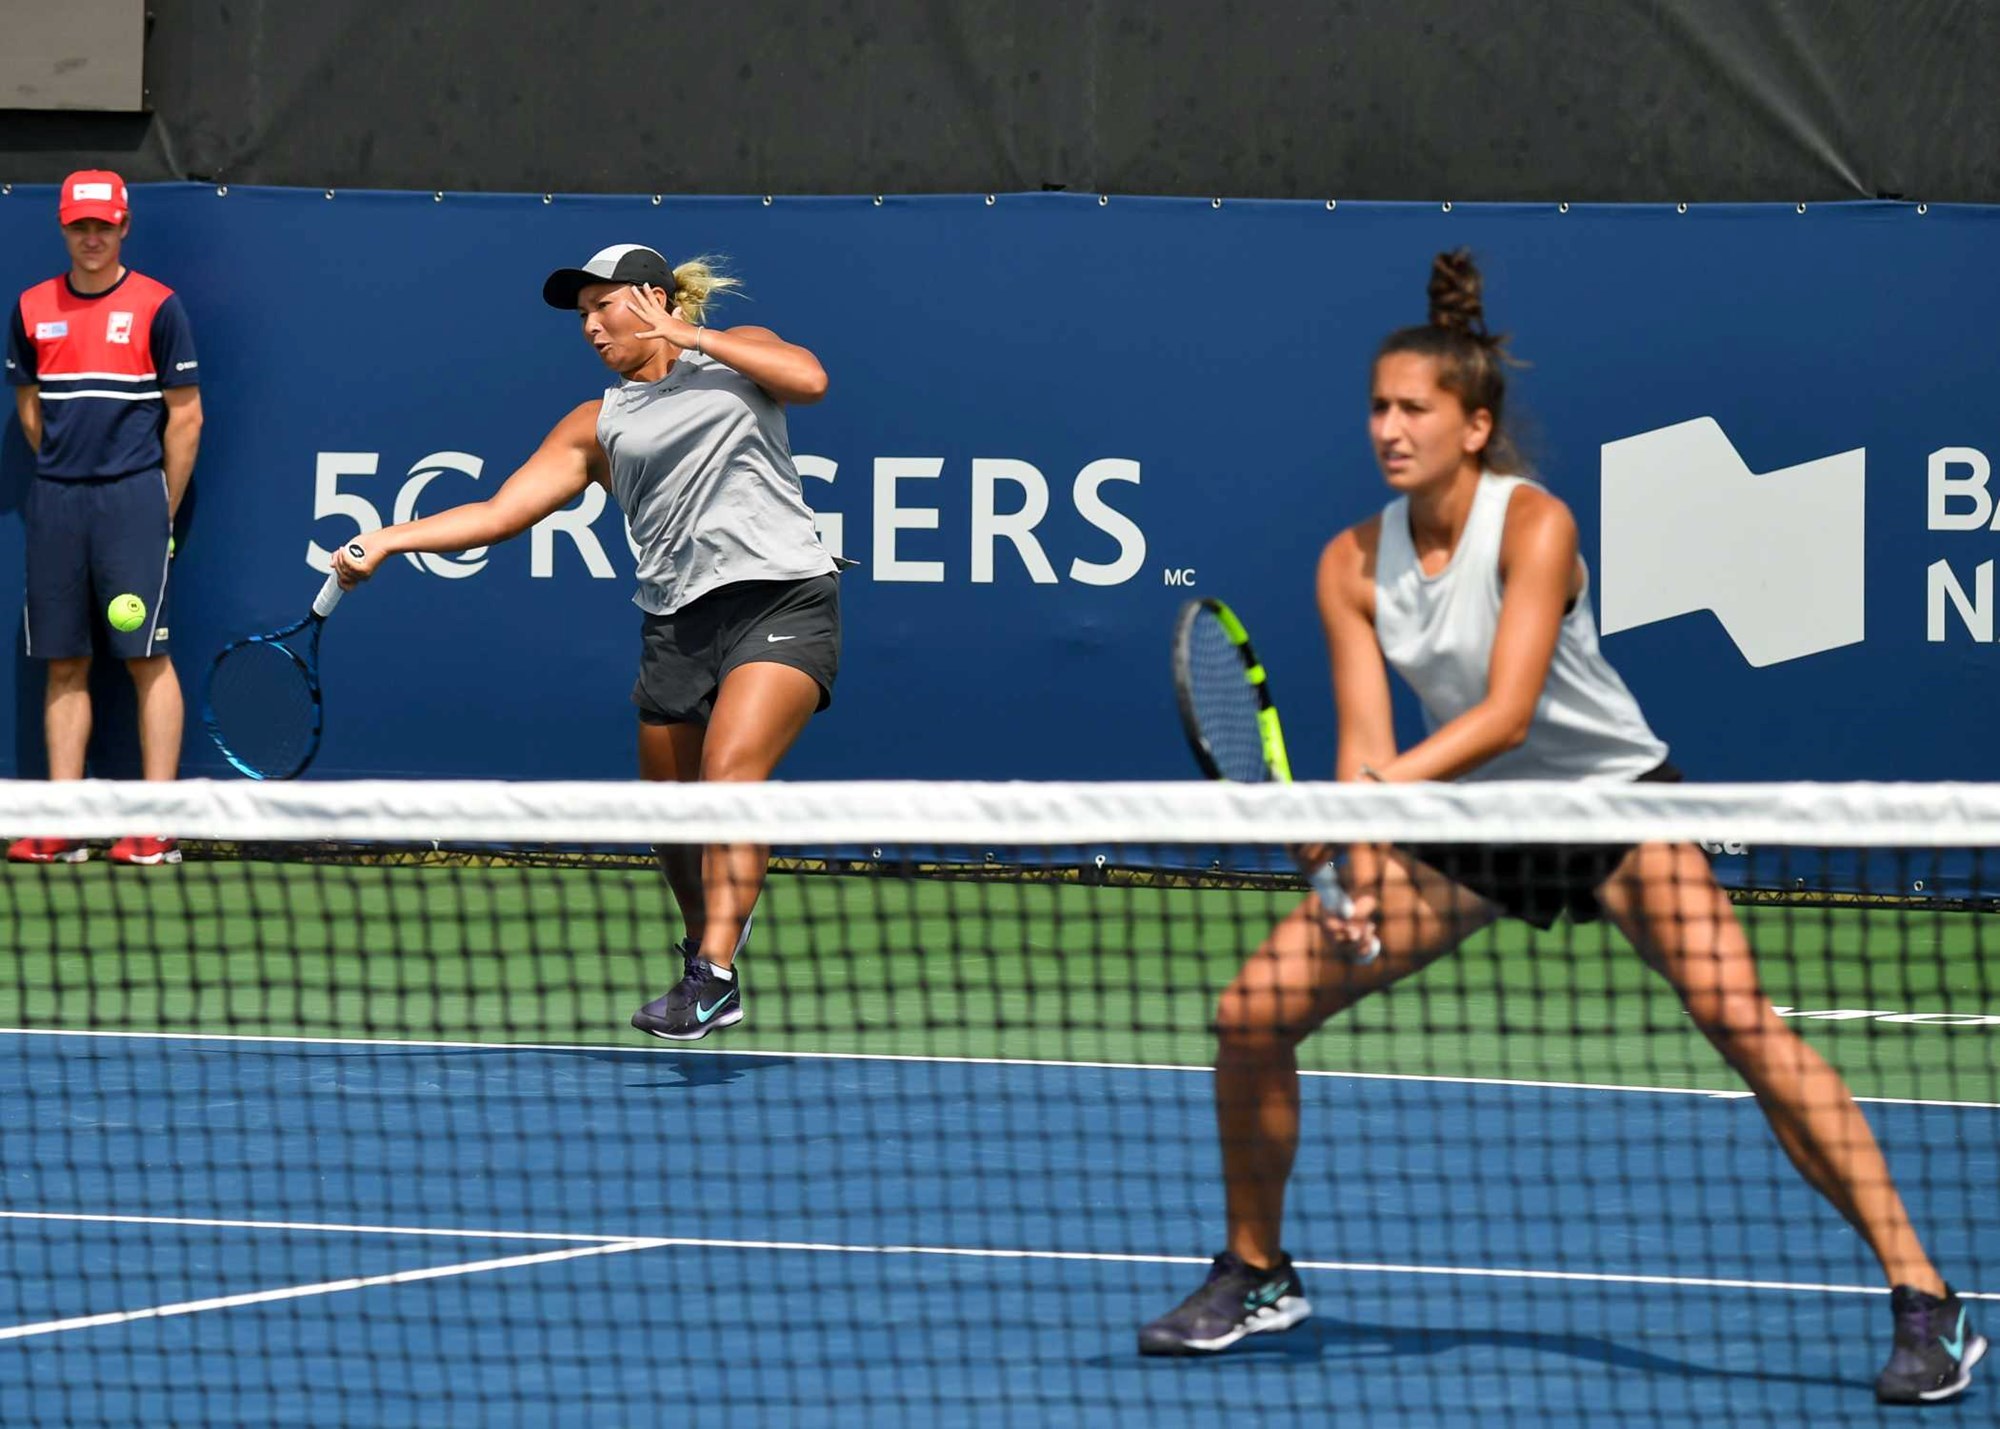 Tara Moore hitting a forehand in the Monterrey Open women's doubles with Emina Bektas